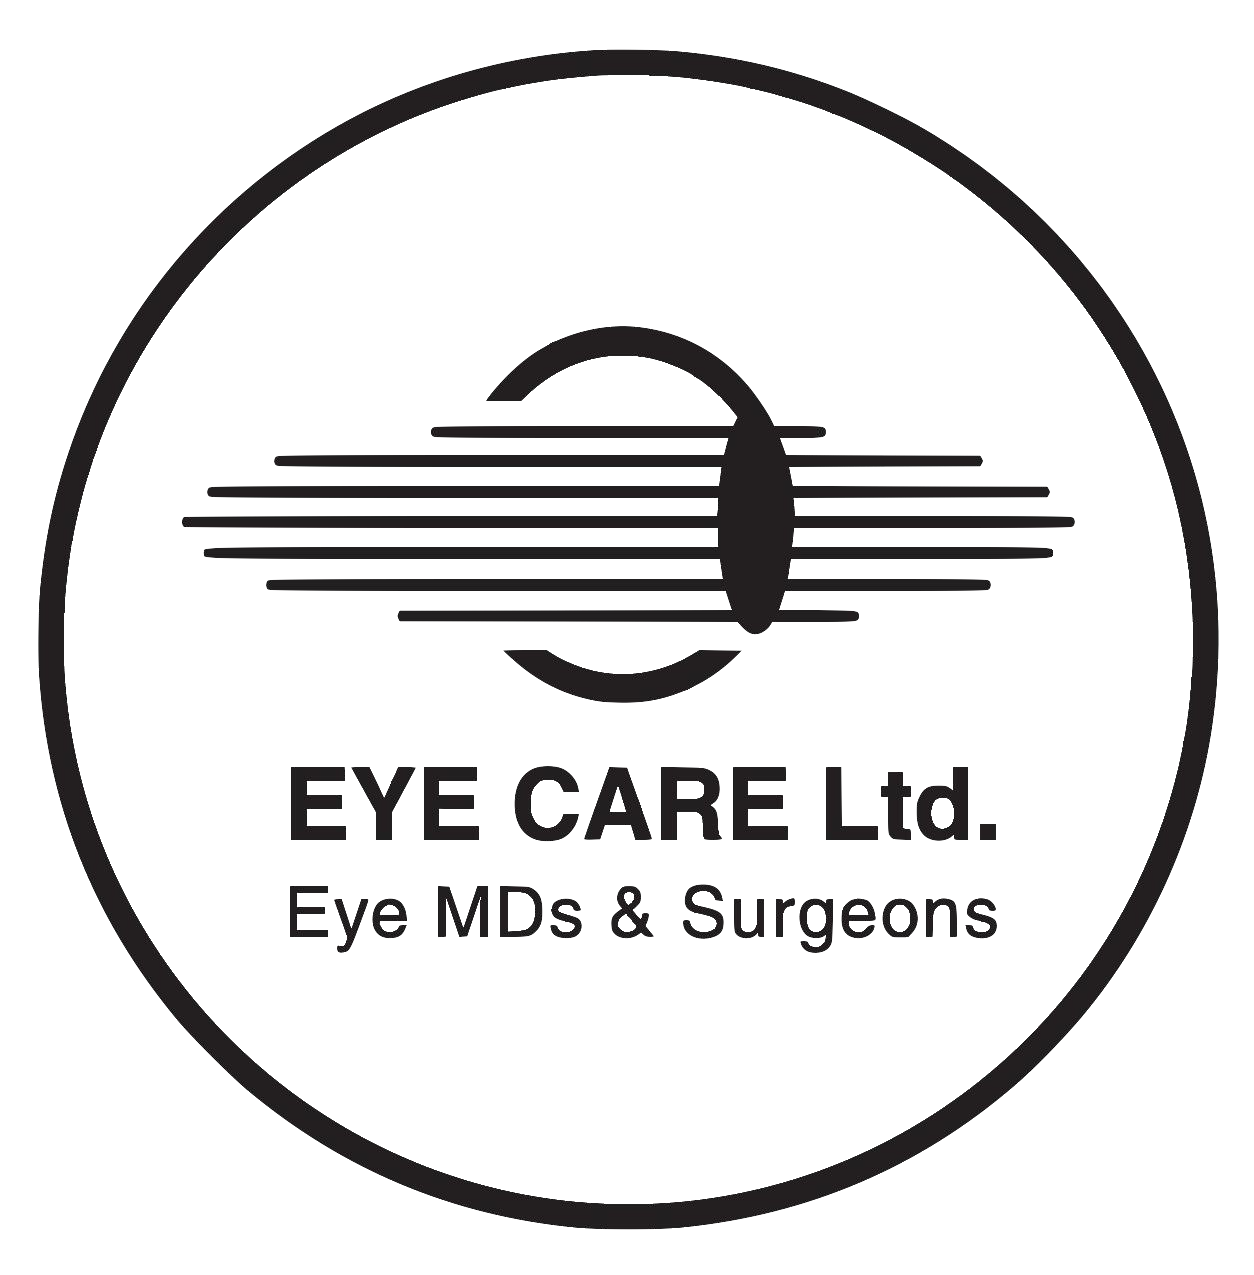 Latest news from Eye Care Ltd - Eye Care Ltd - Ophthalmologists, Eye  Surgeons